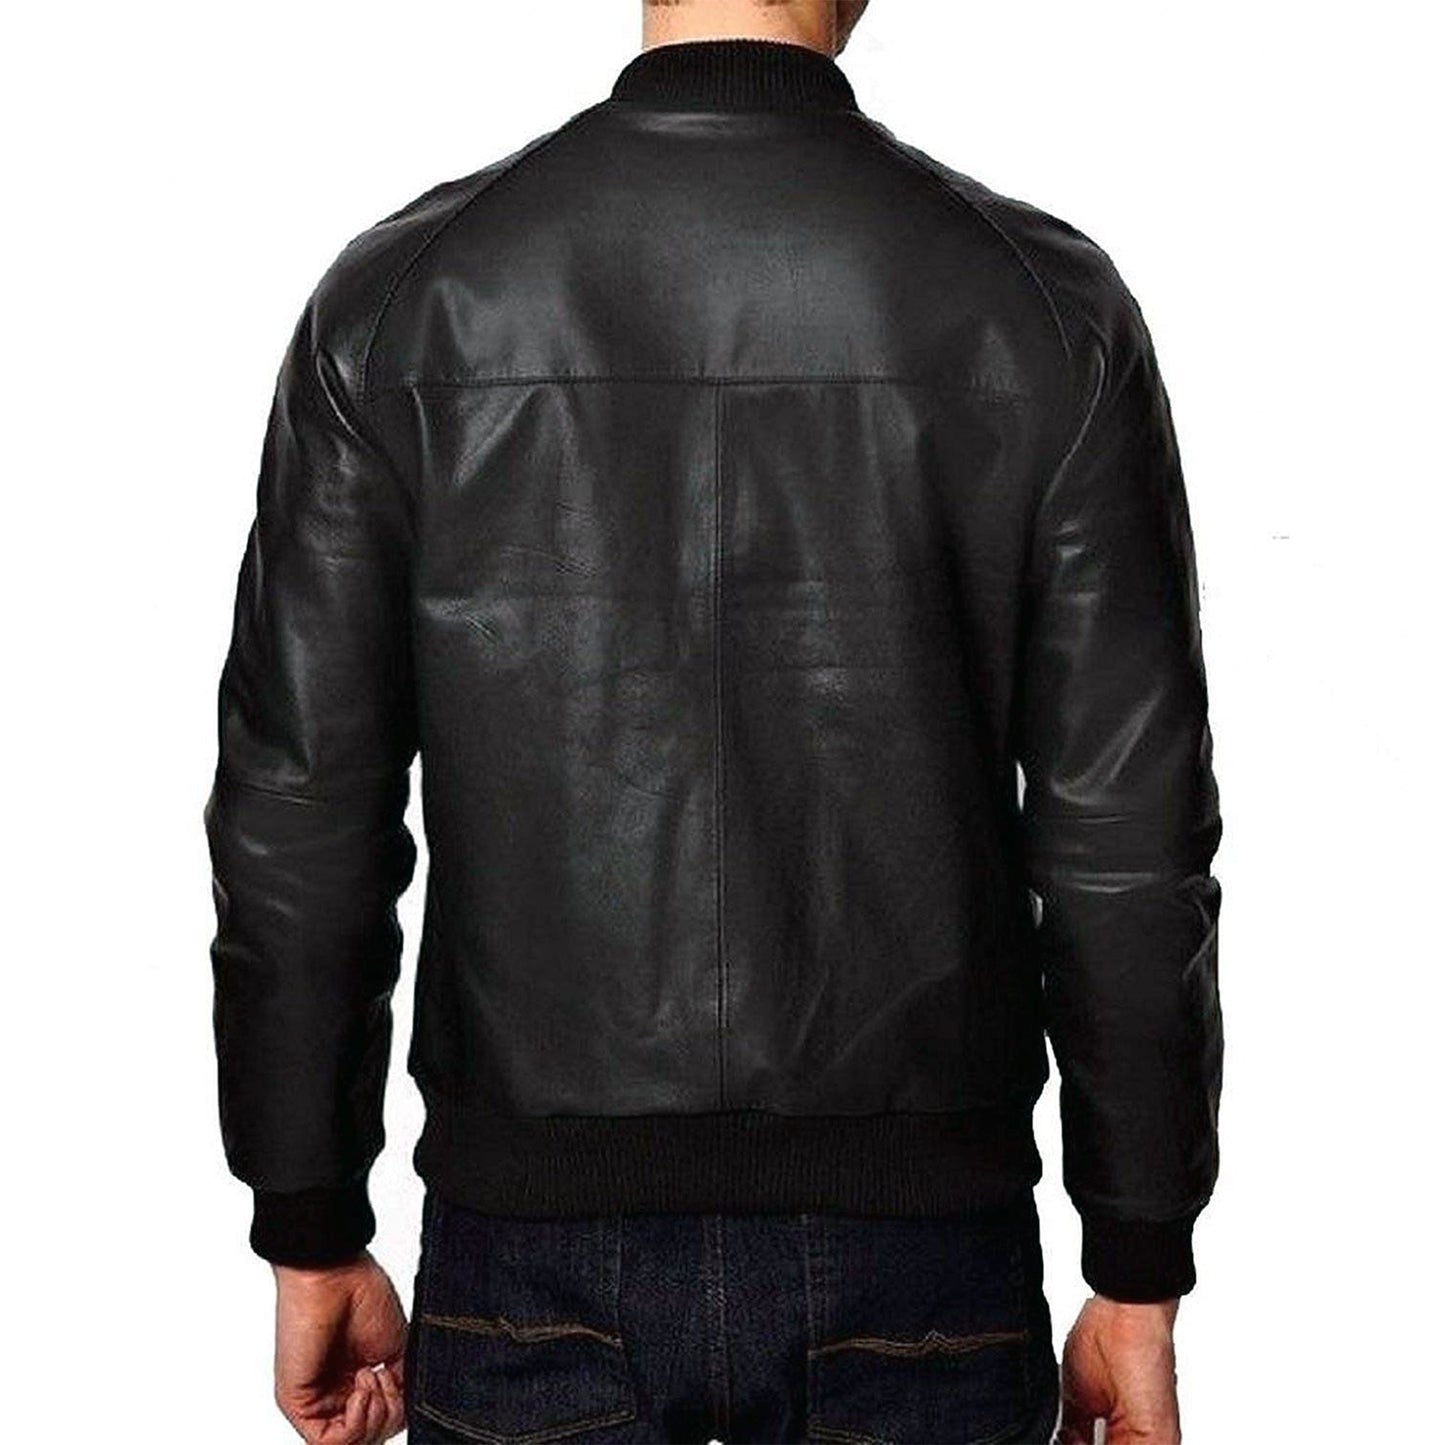 Men's Plain One Panel Black Bomber Jacket Leather